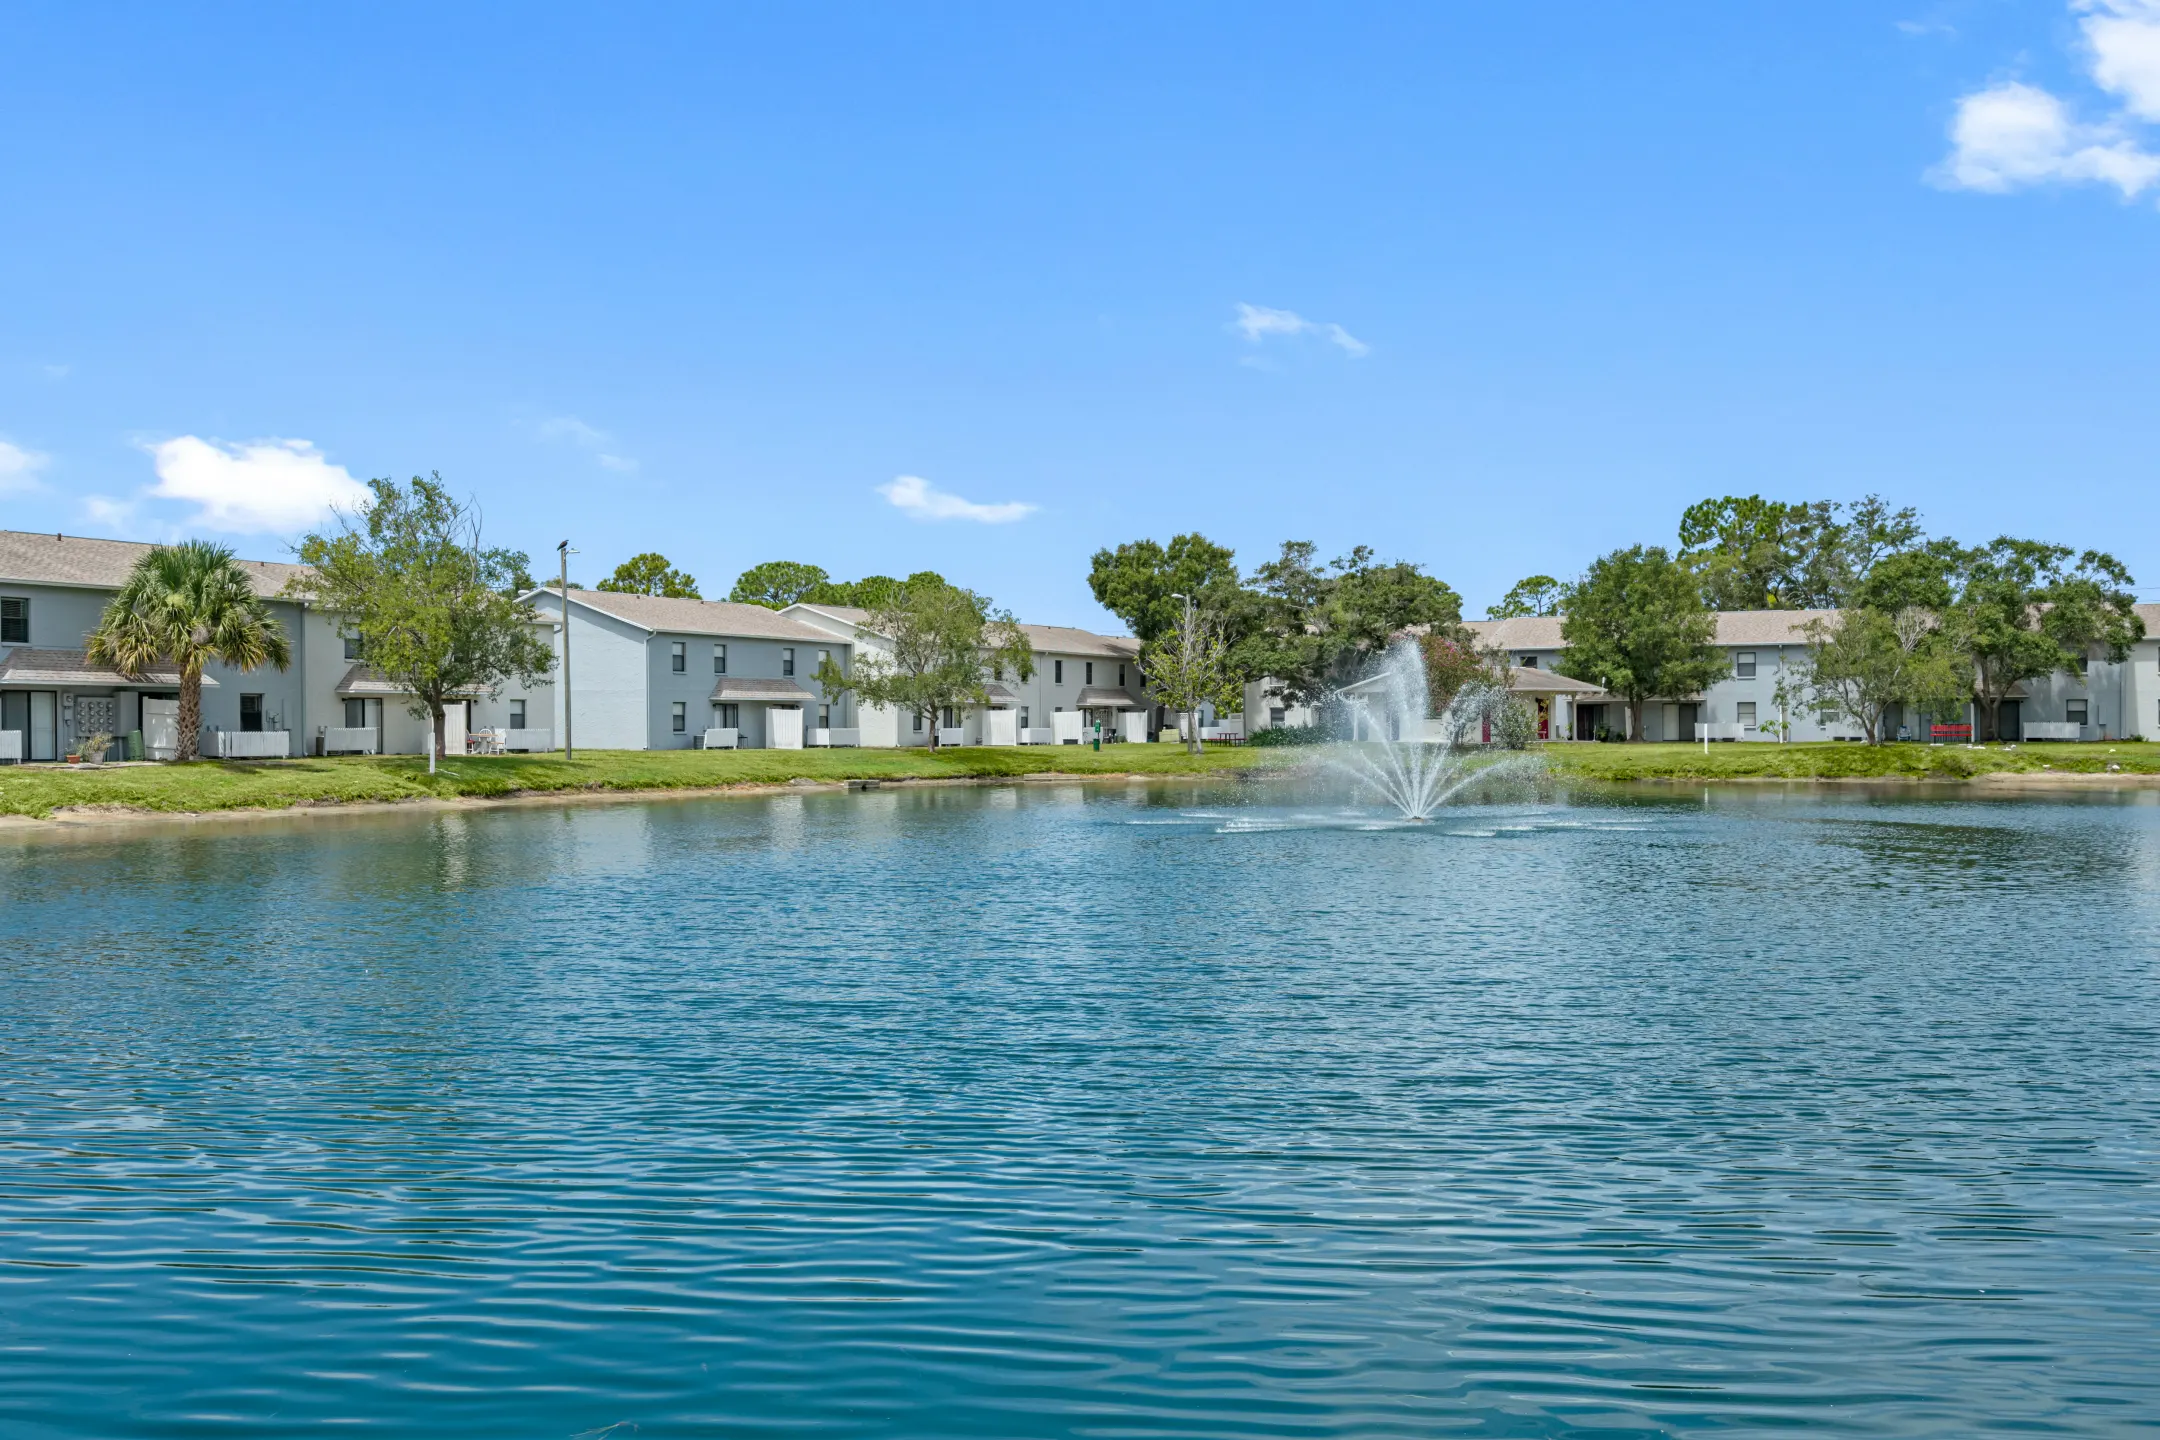 Pool - 49th St Apartments - Pinellas Park, FL